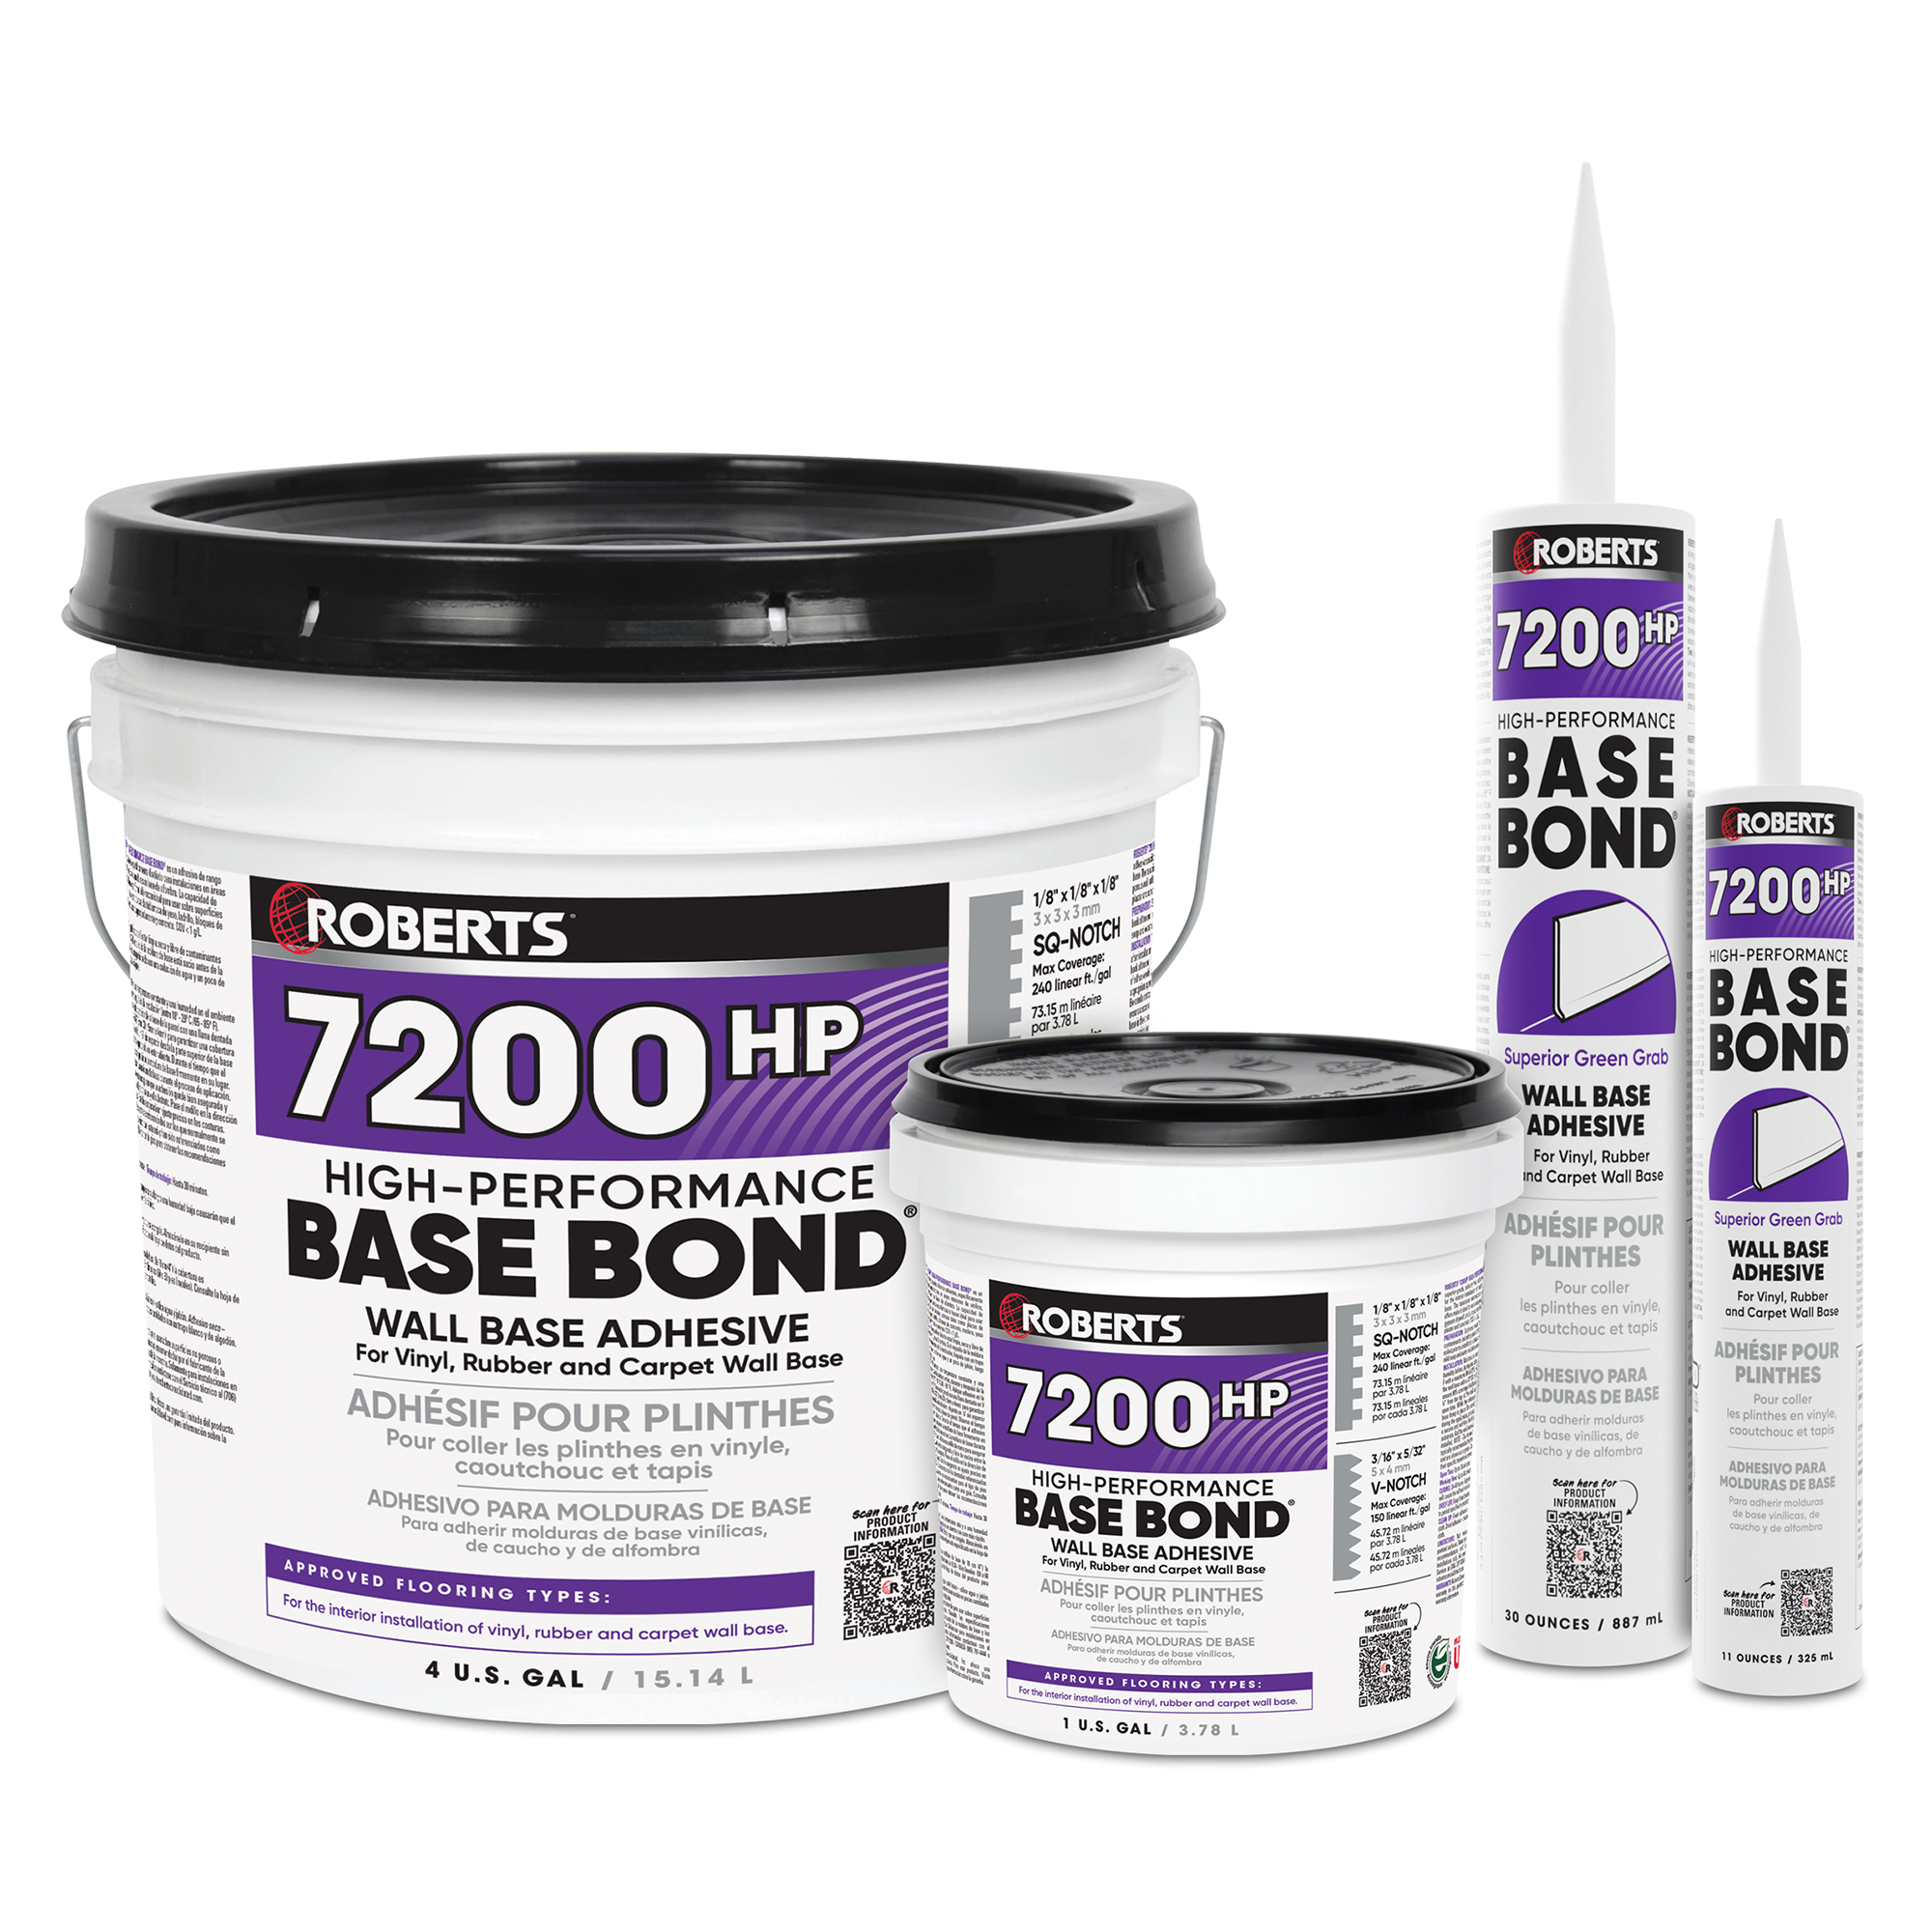 7200HP HIGH-PERFORMANCE BASE BOND® WALL BASE ADHESIVE